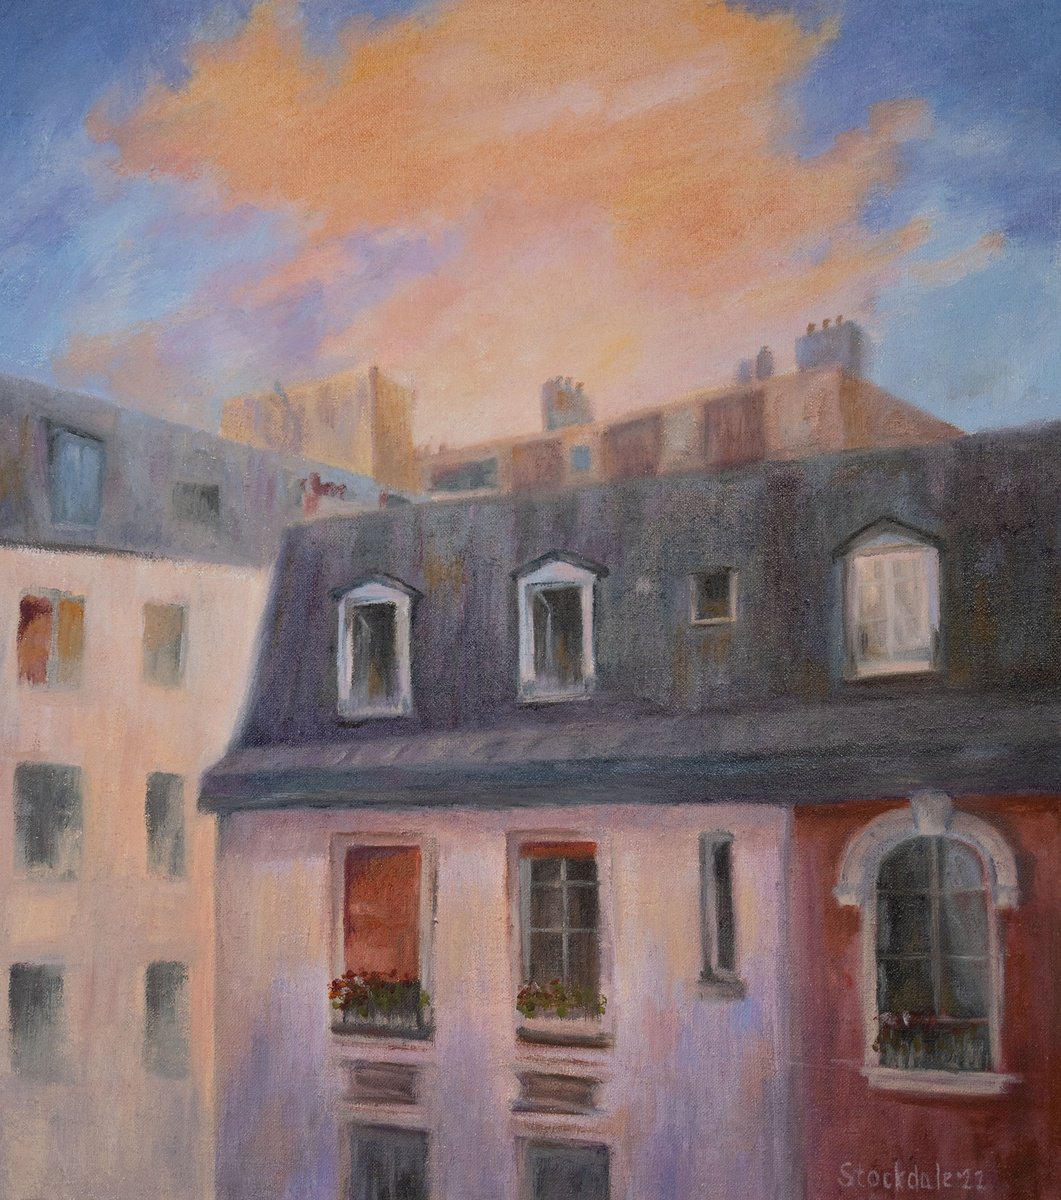 Sunrise in Paris by Maria Stockdale